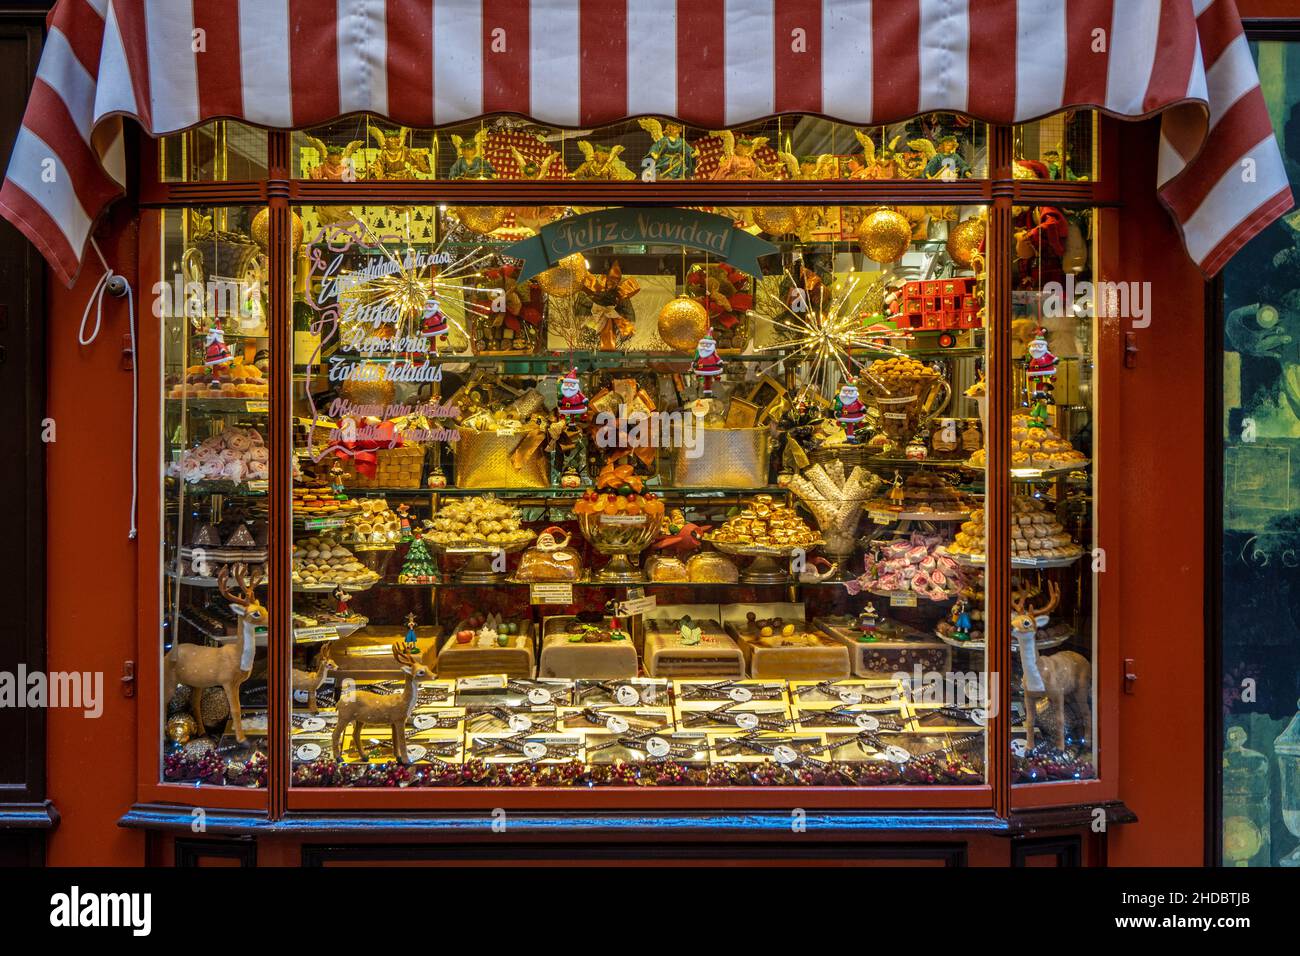 Europa, Spanien, Insel, Mallorca, Laden in der Altstadt von Palma de Mallorca, Suessigkeiten, Schokolade, Stock Photo